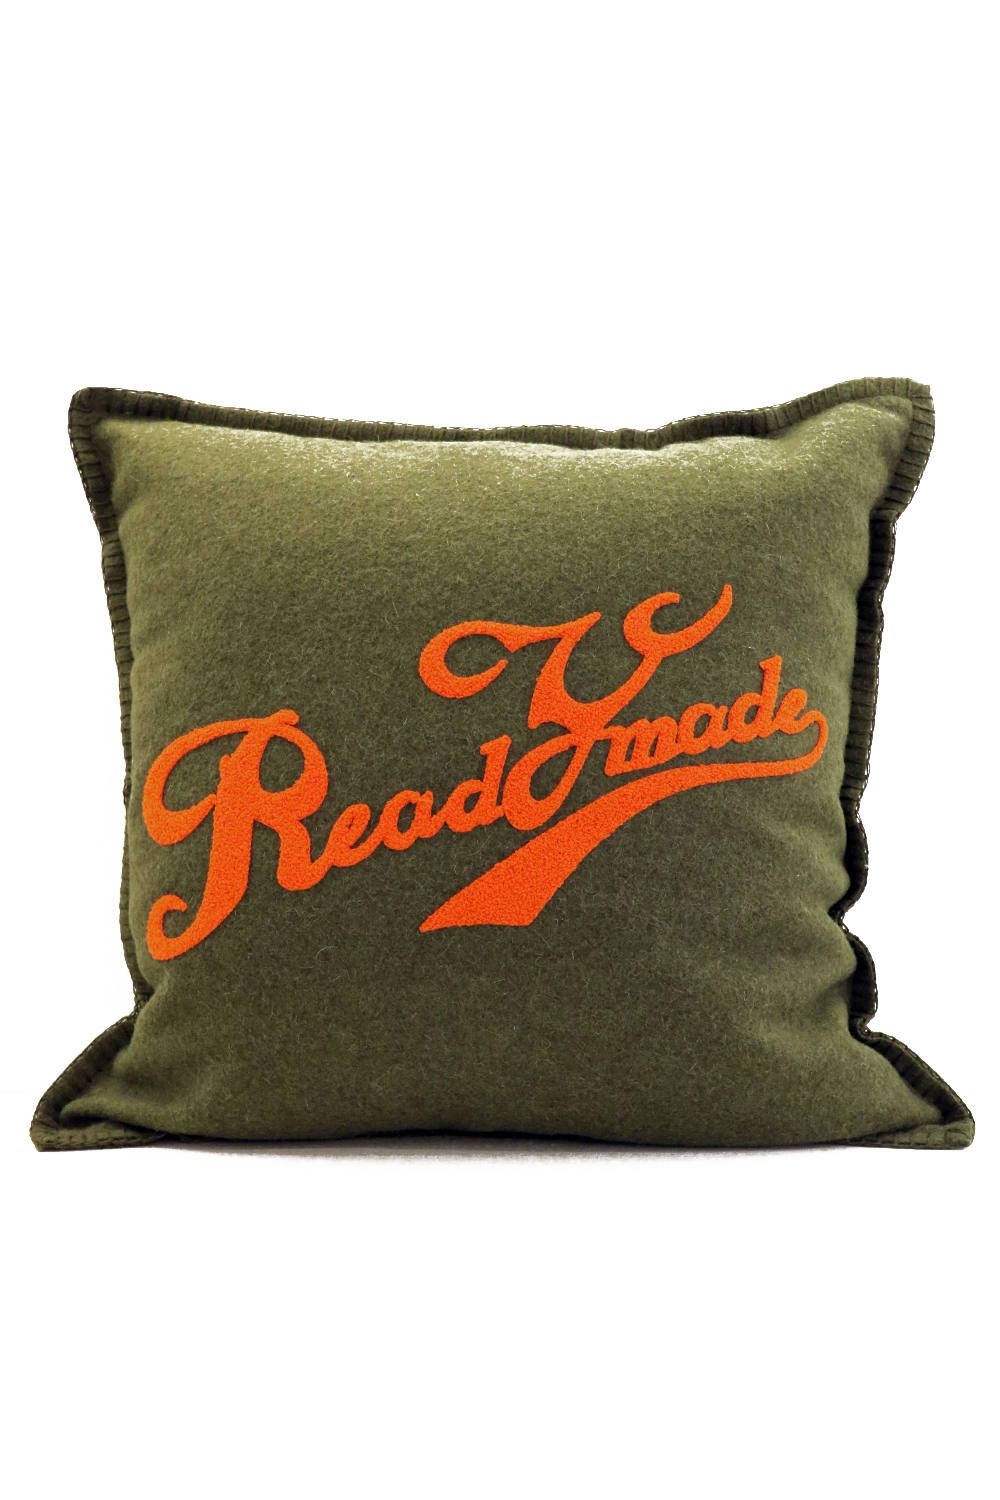 READYMADE - Cushion | laid-back